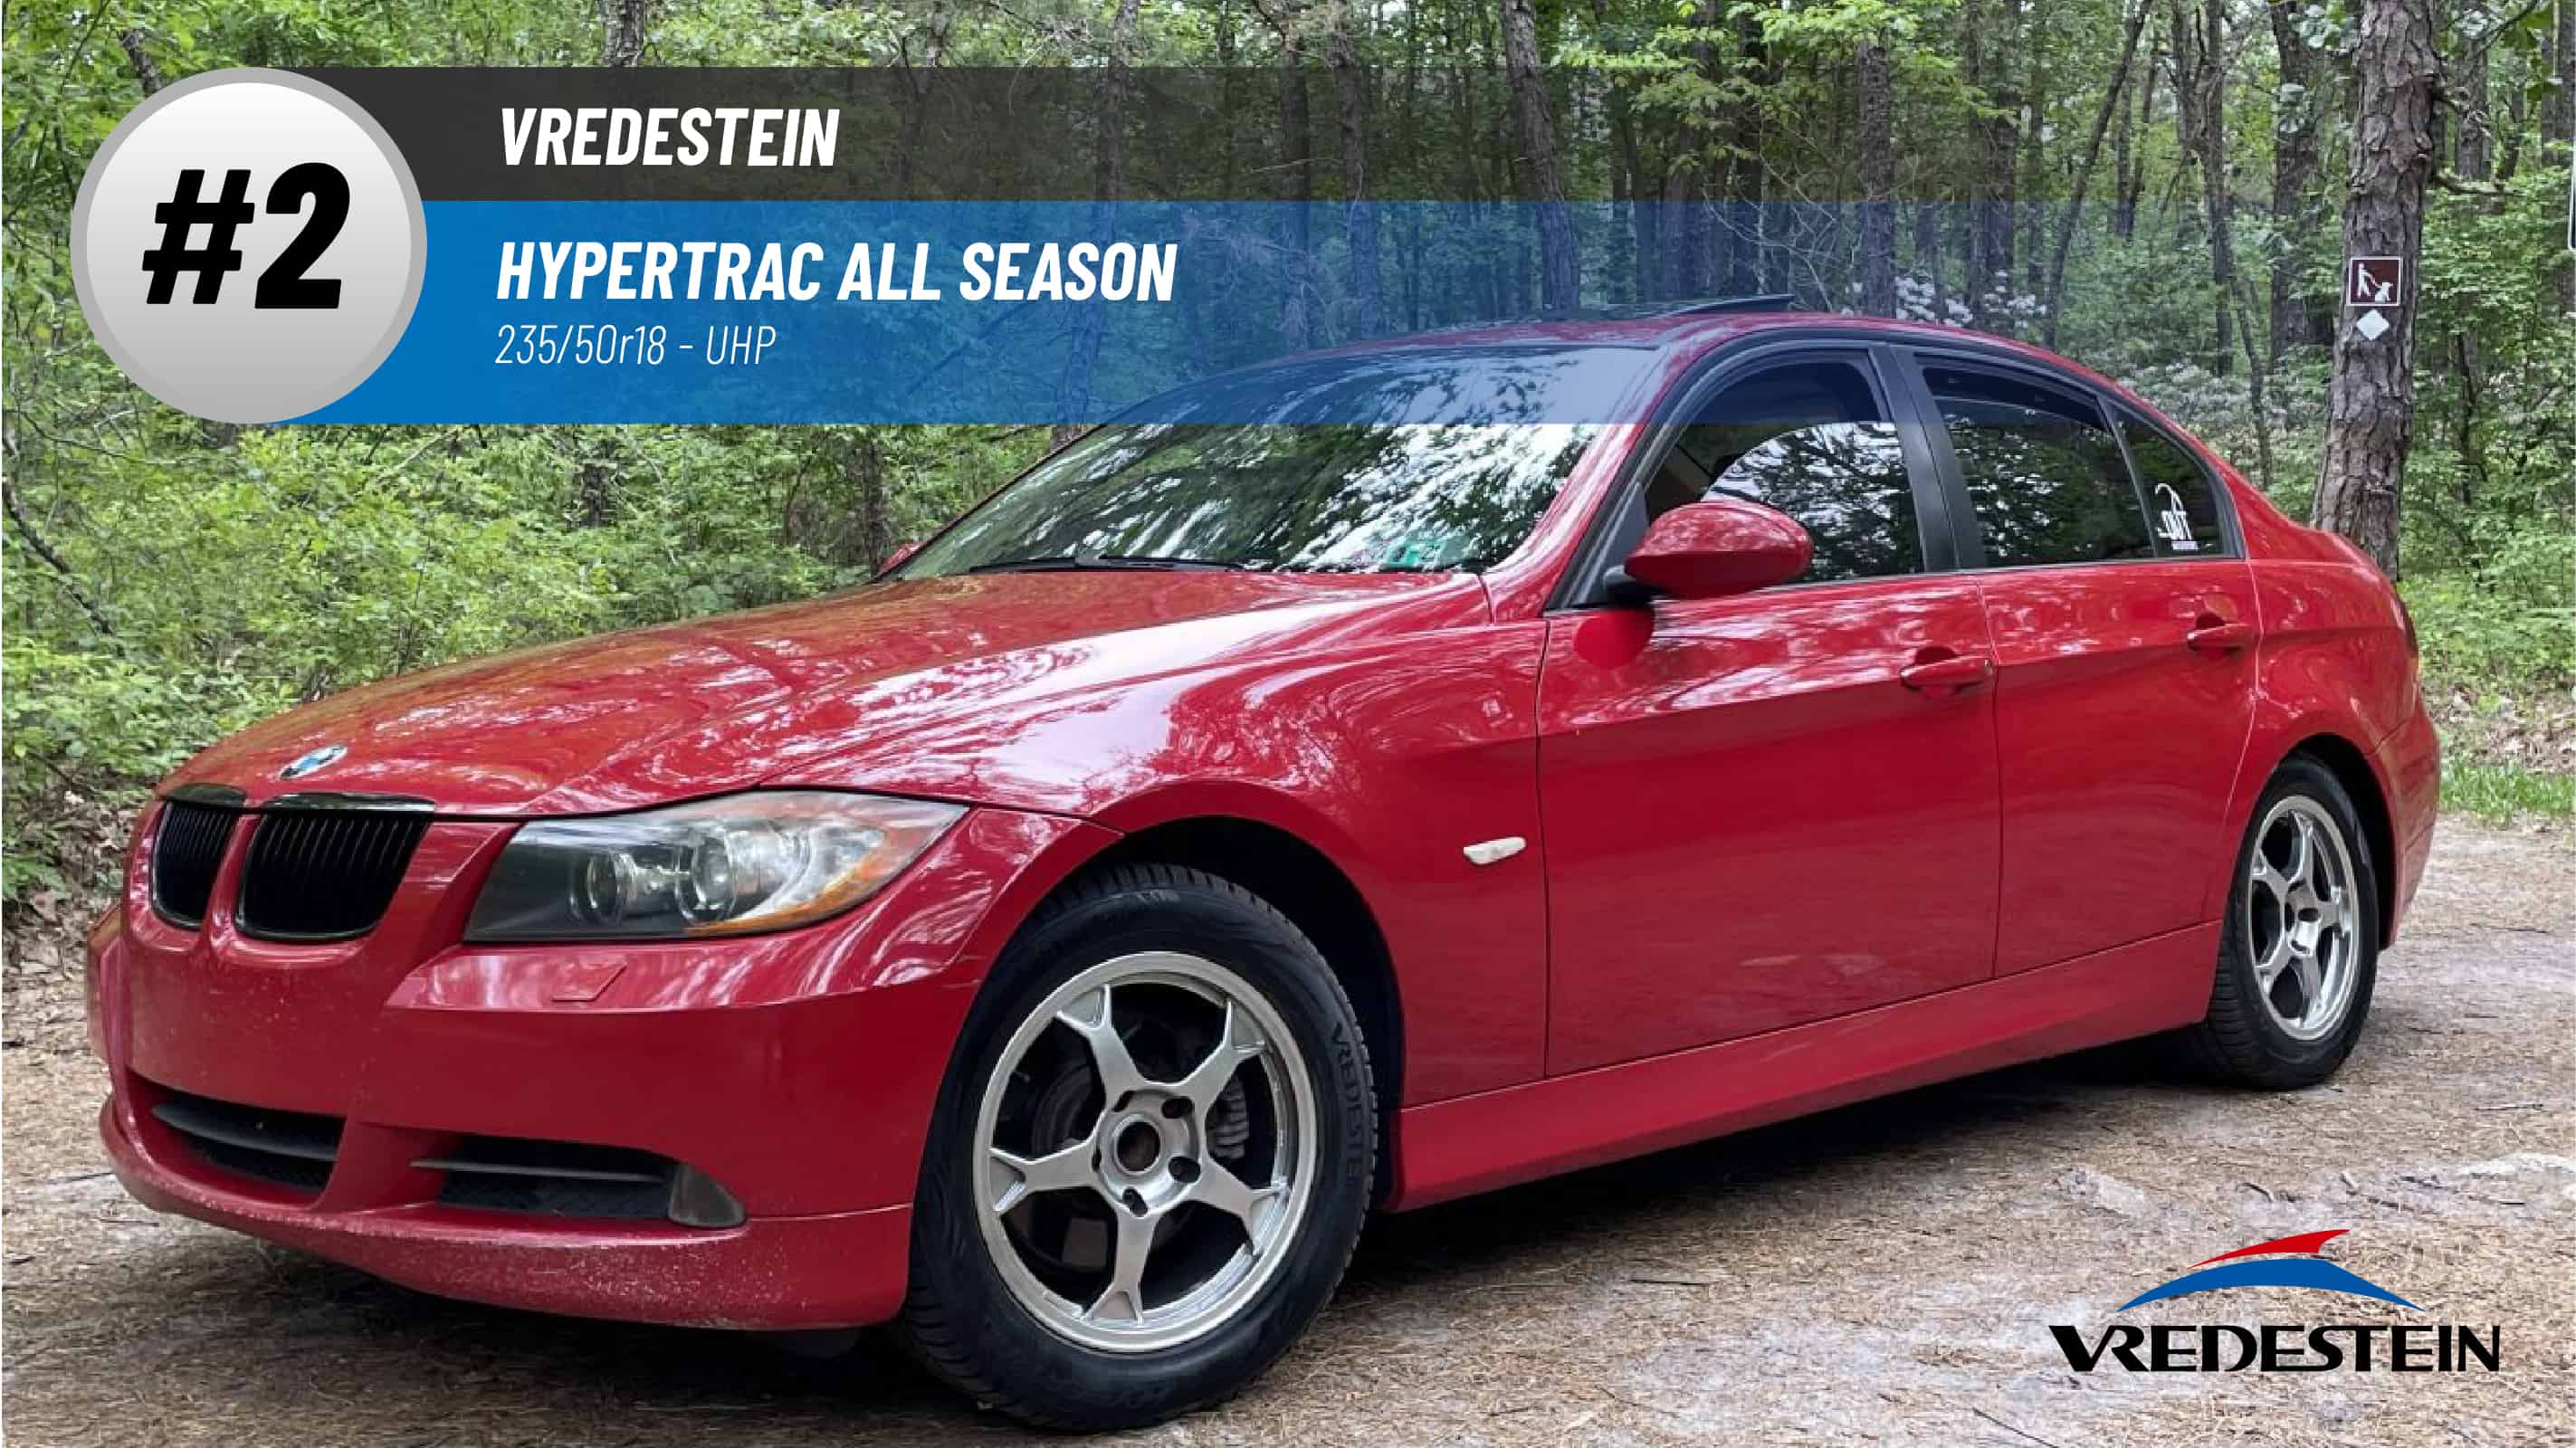 Top #2 UHP Tires: Vredestein HyperTrac All Season – 235/50r18